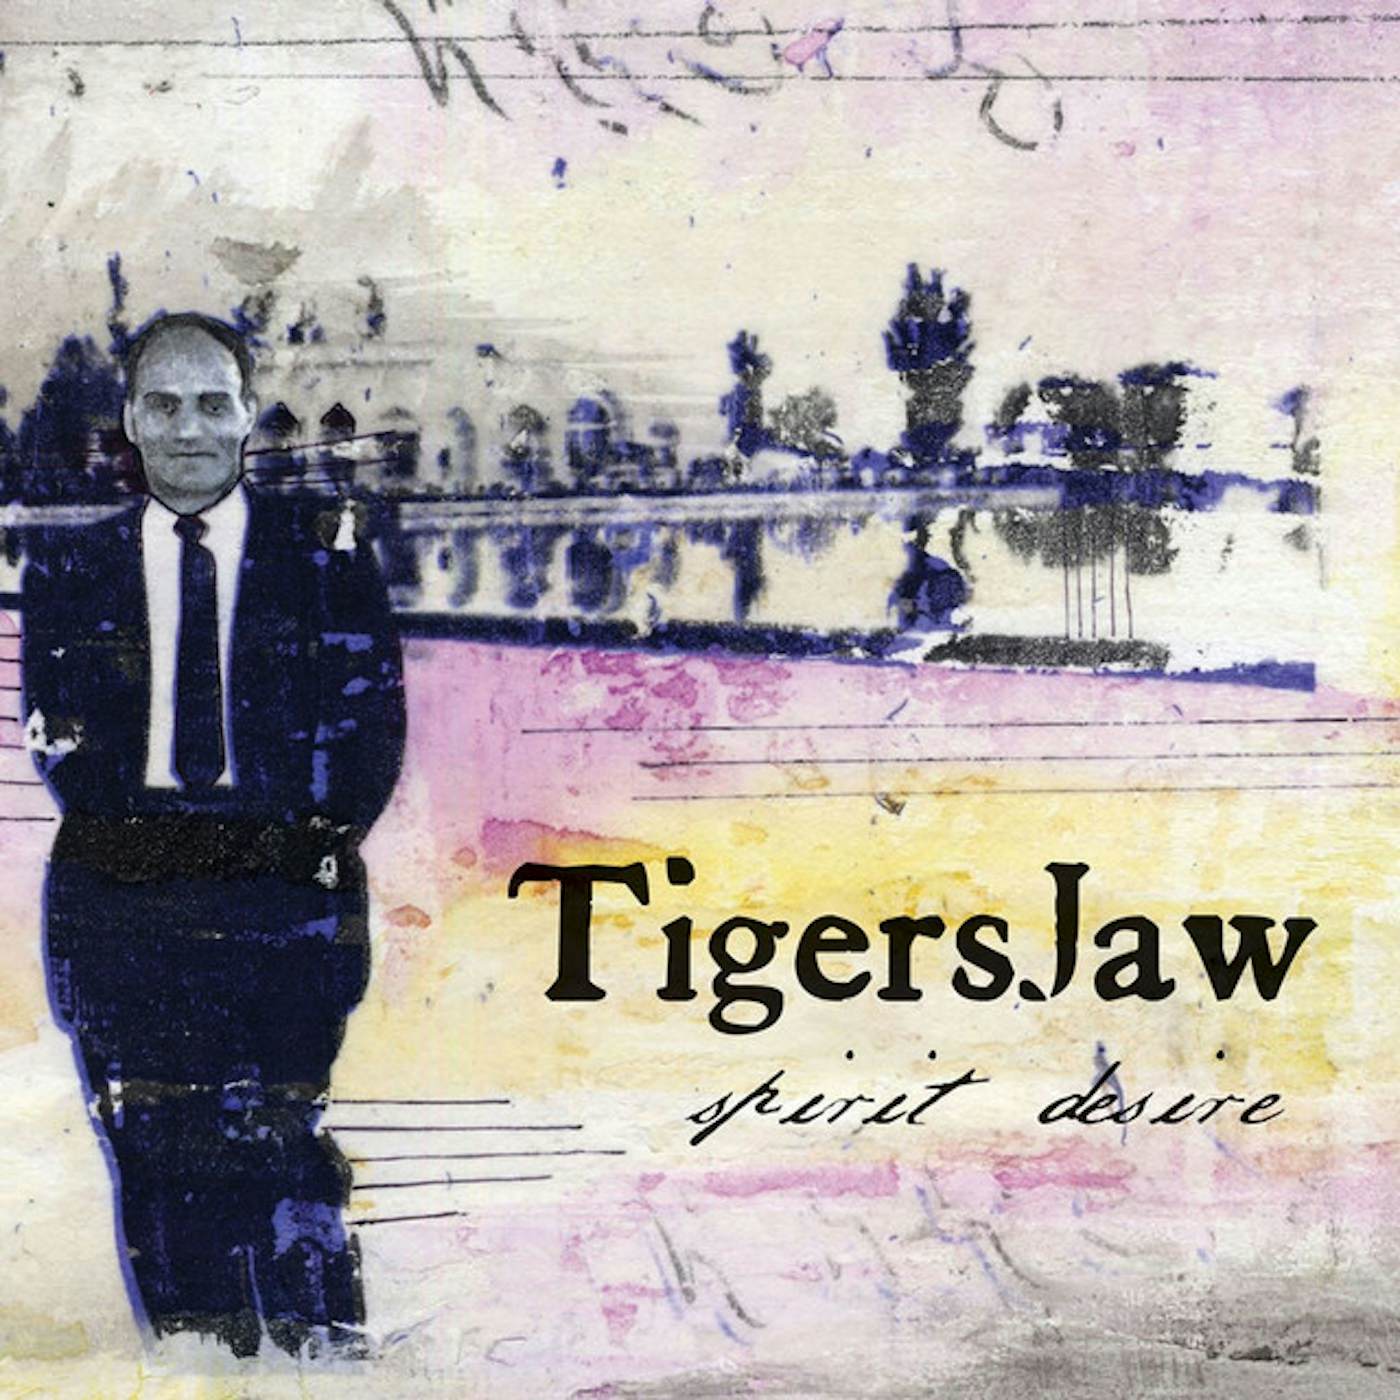 Tigers Jaw SPRIT DESIRE Vinyl Record